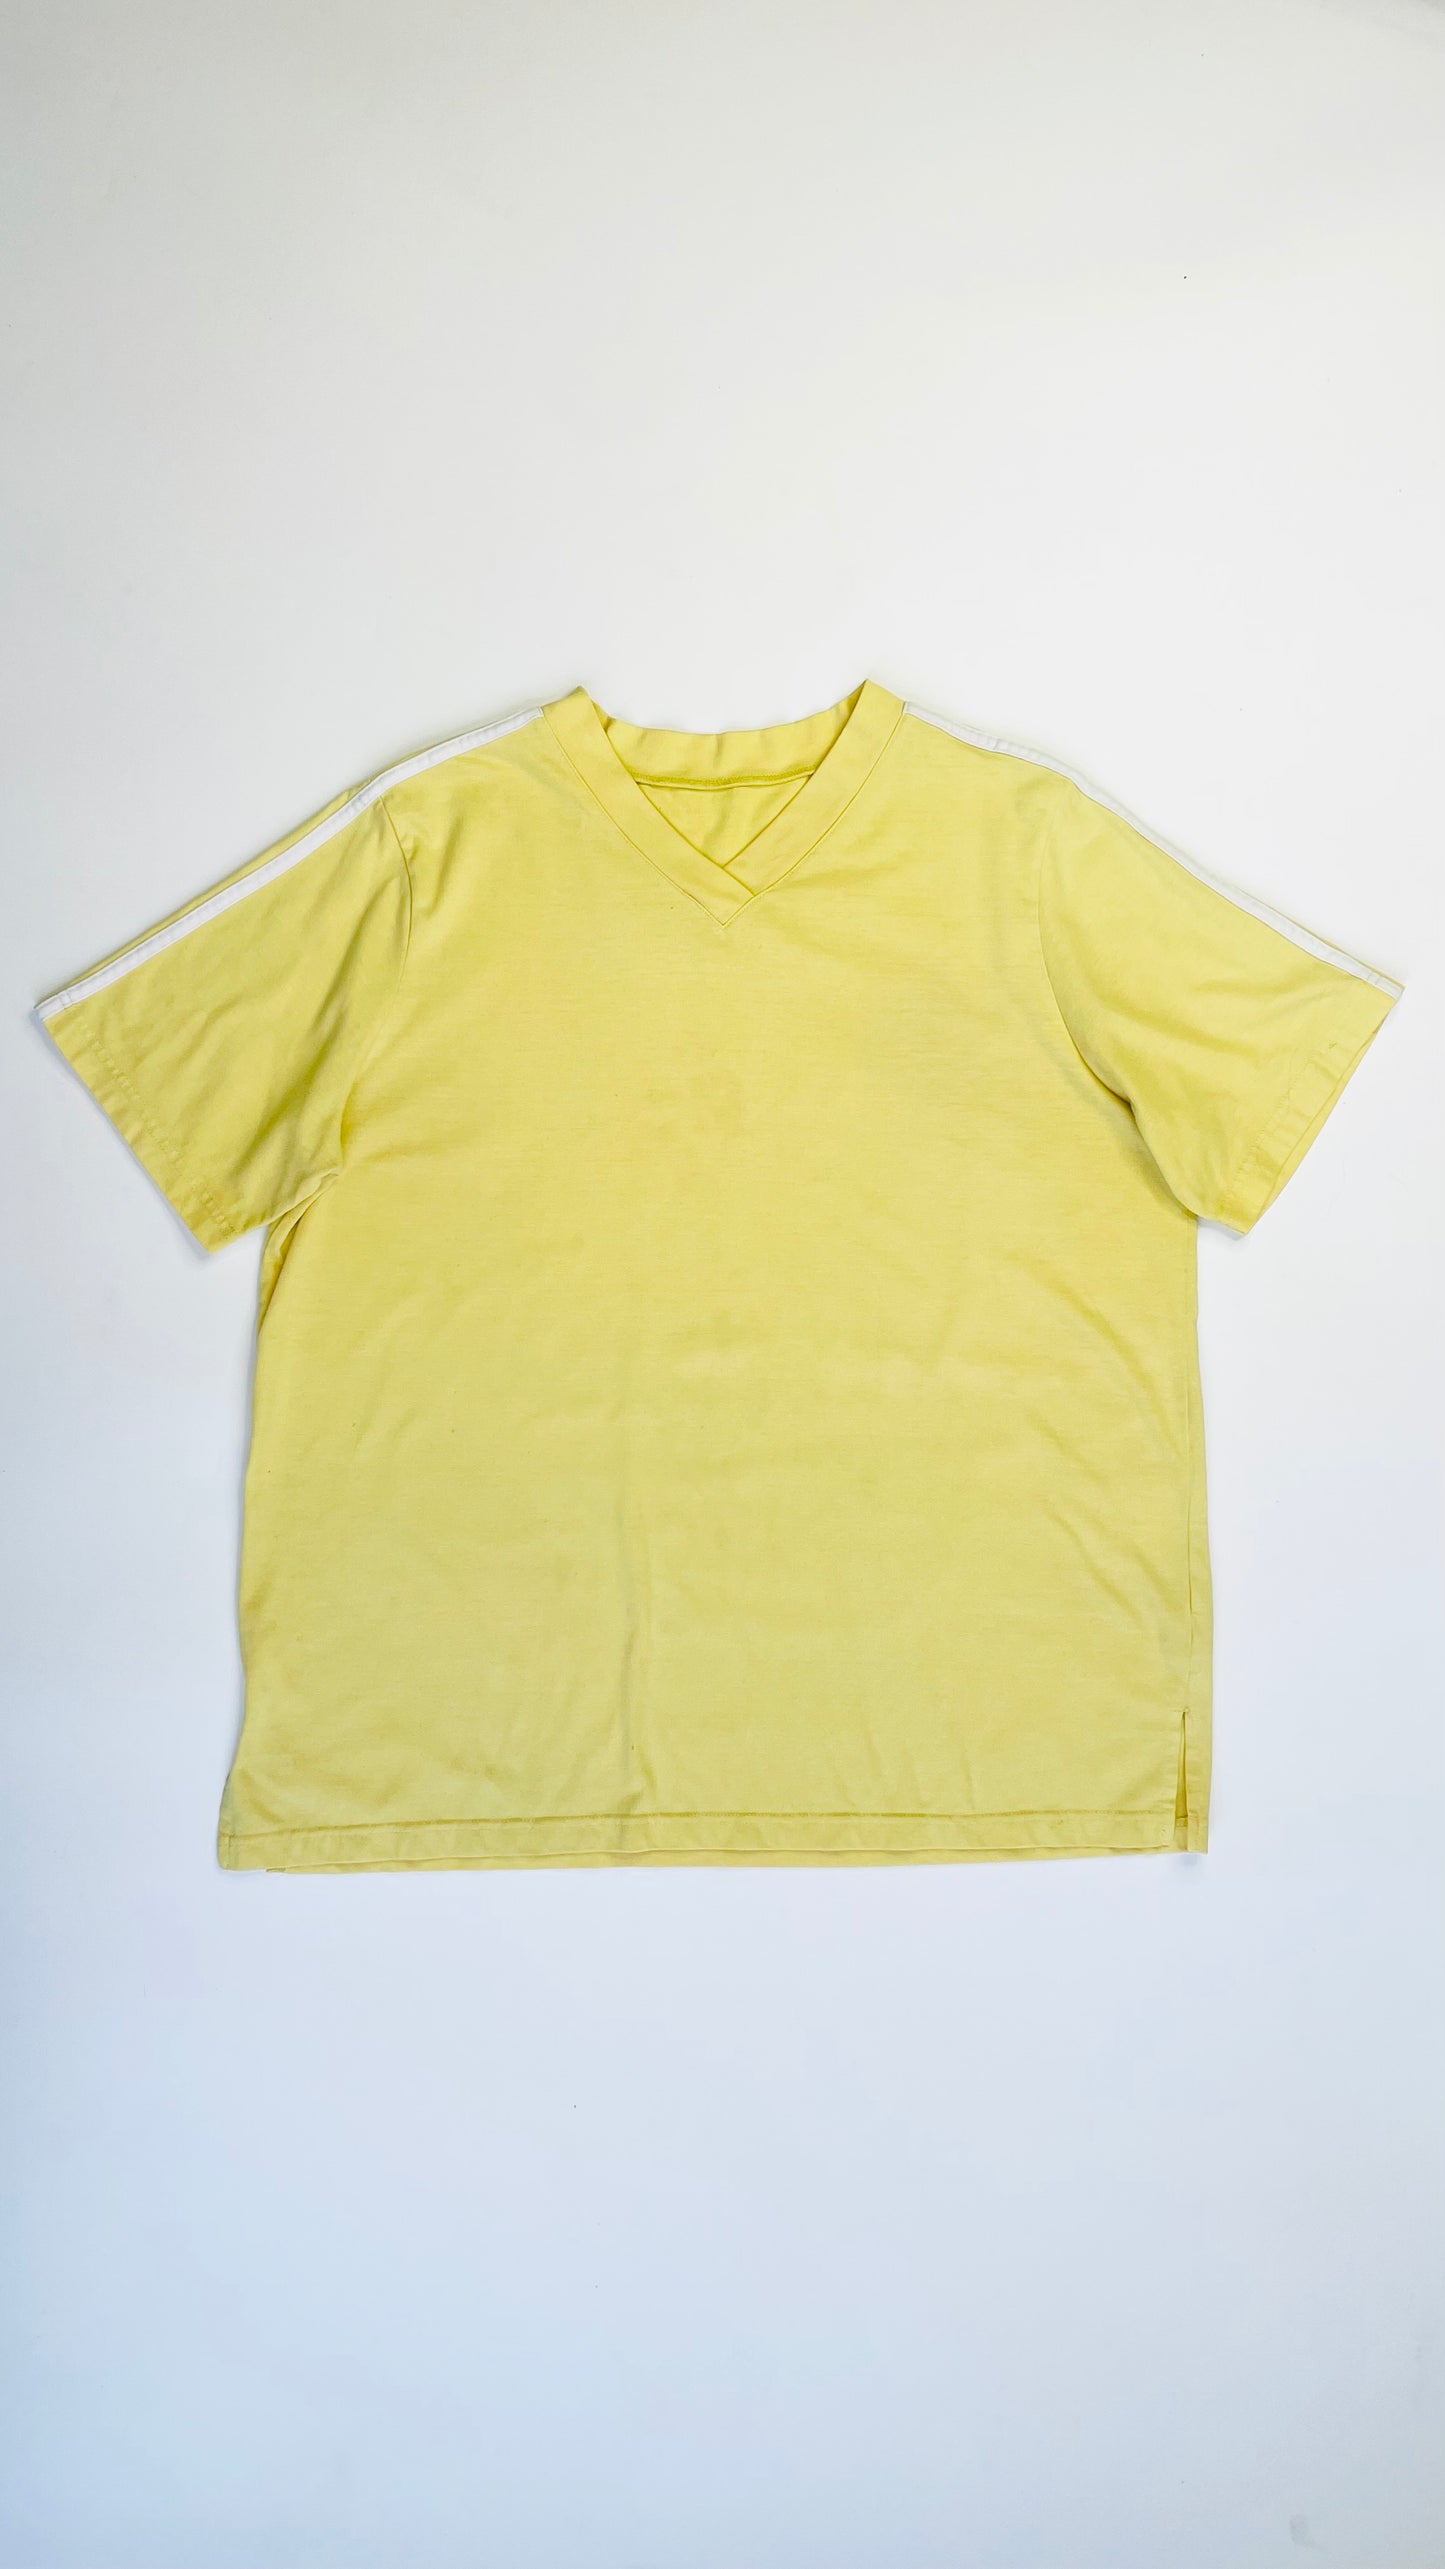 Vintage 90s yellow v neck t shirt - Size XL